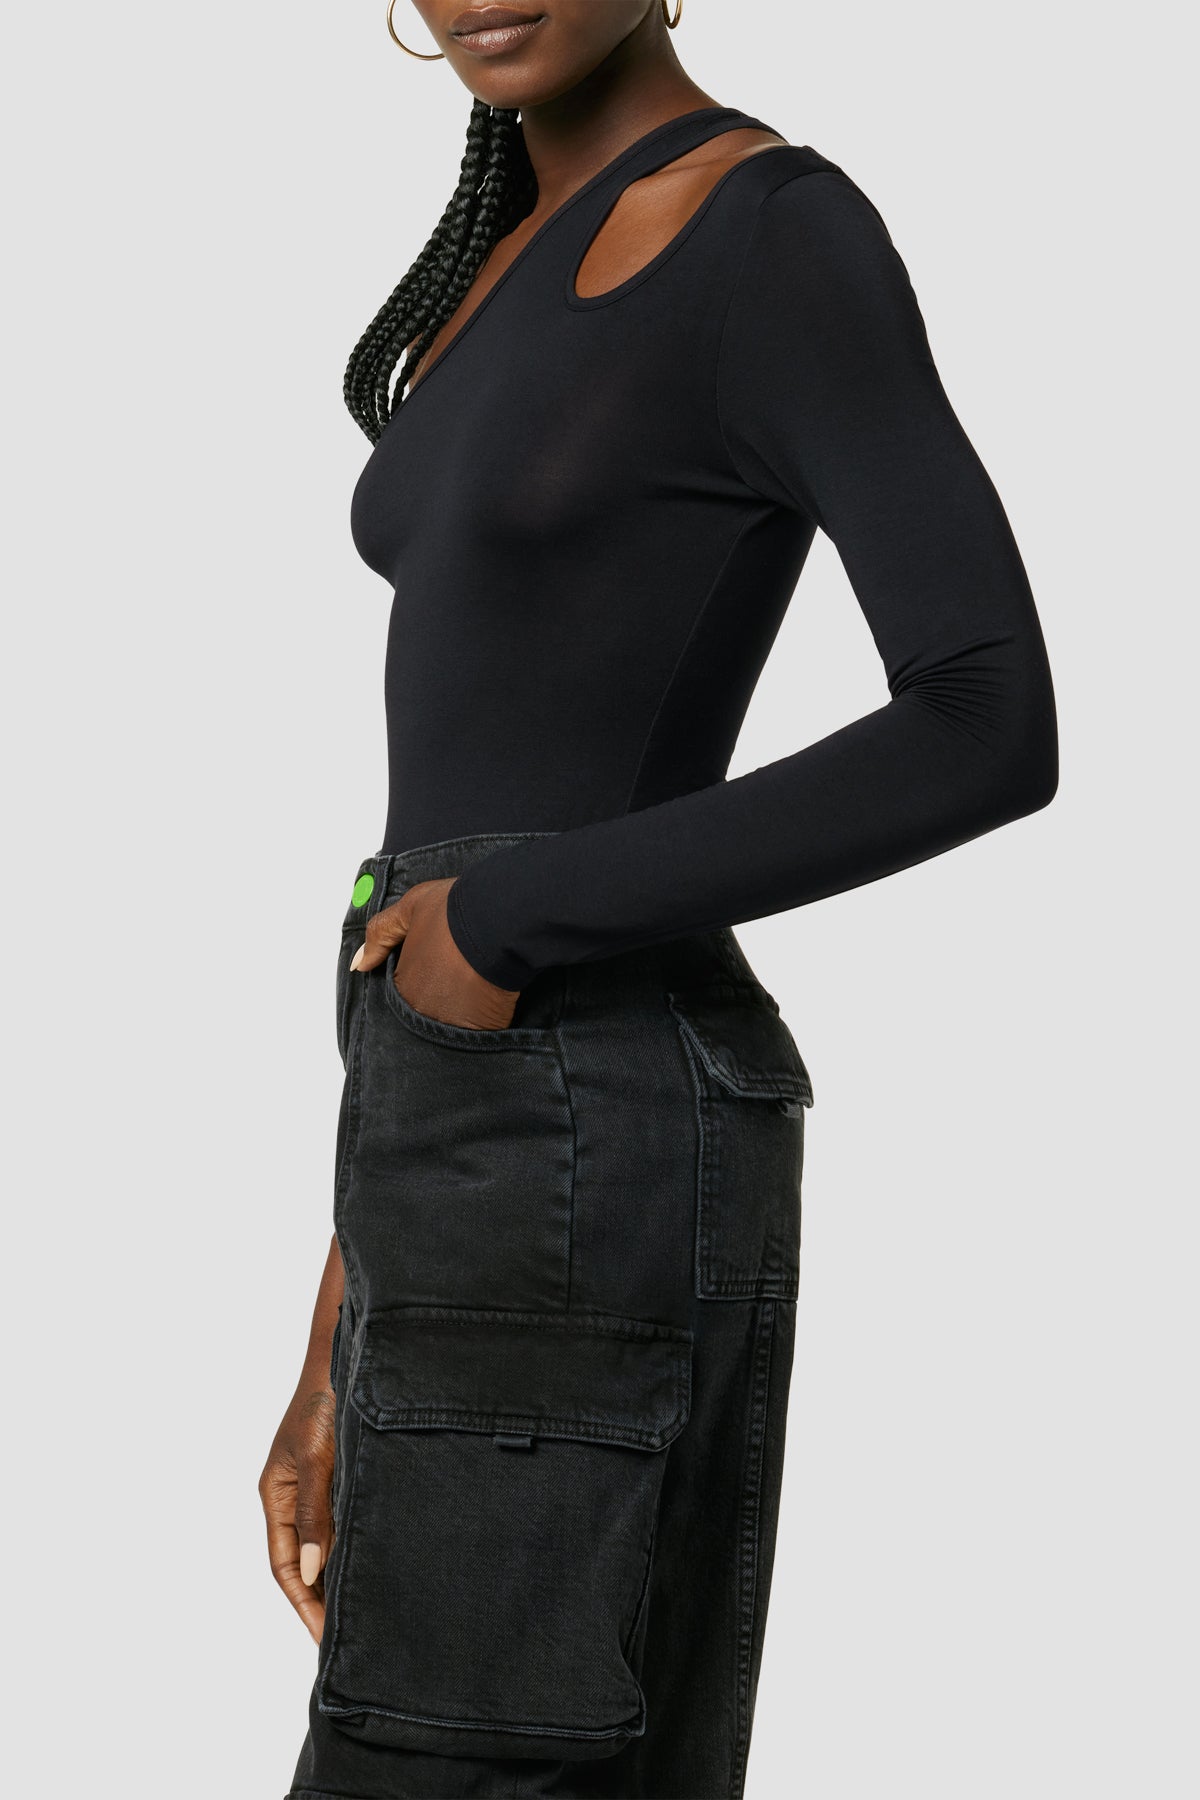 Women's Long-Sleeve Asymmetrical Draped Bodysuit